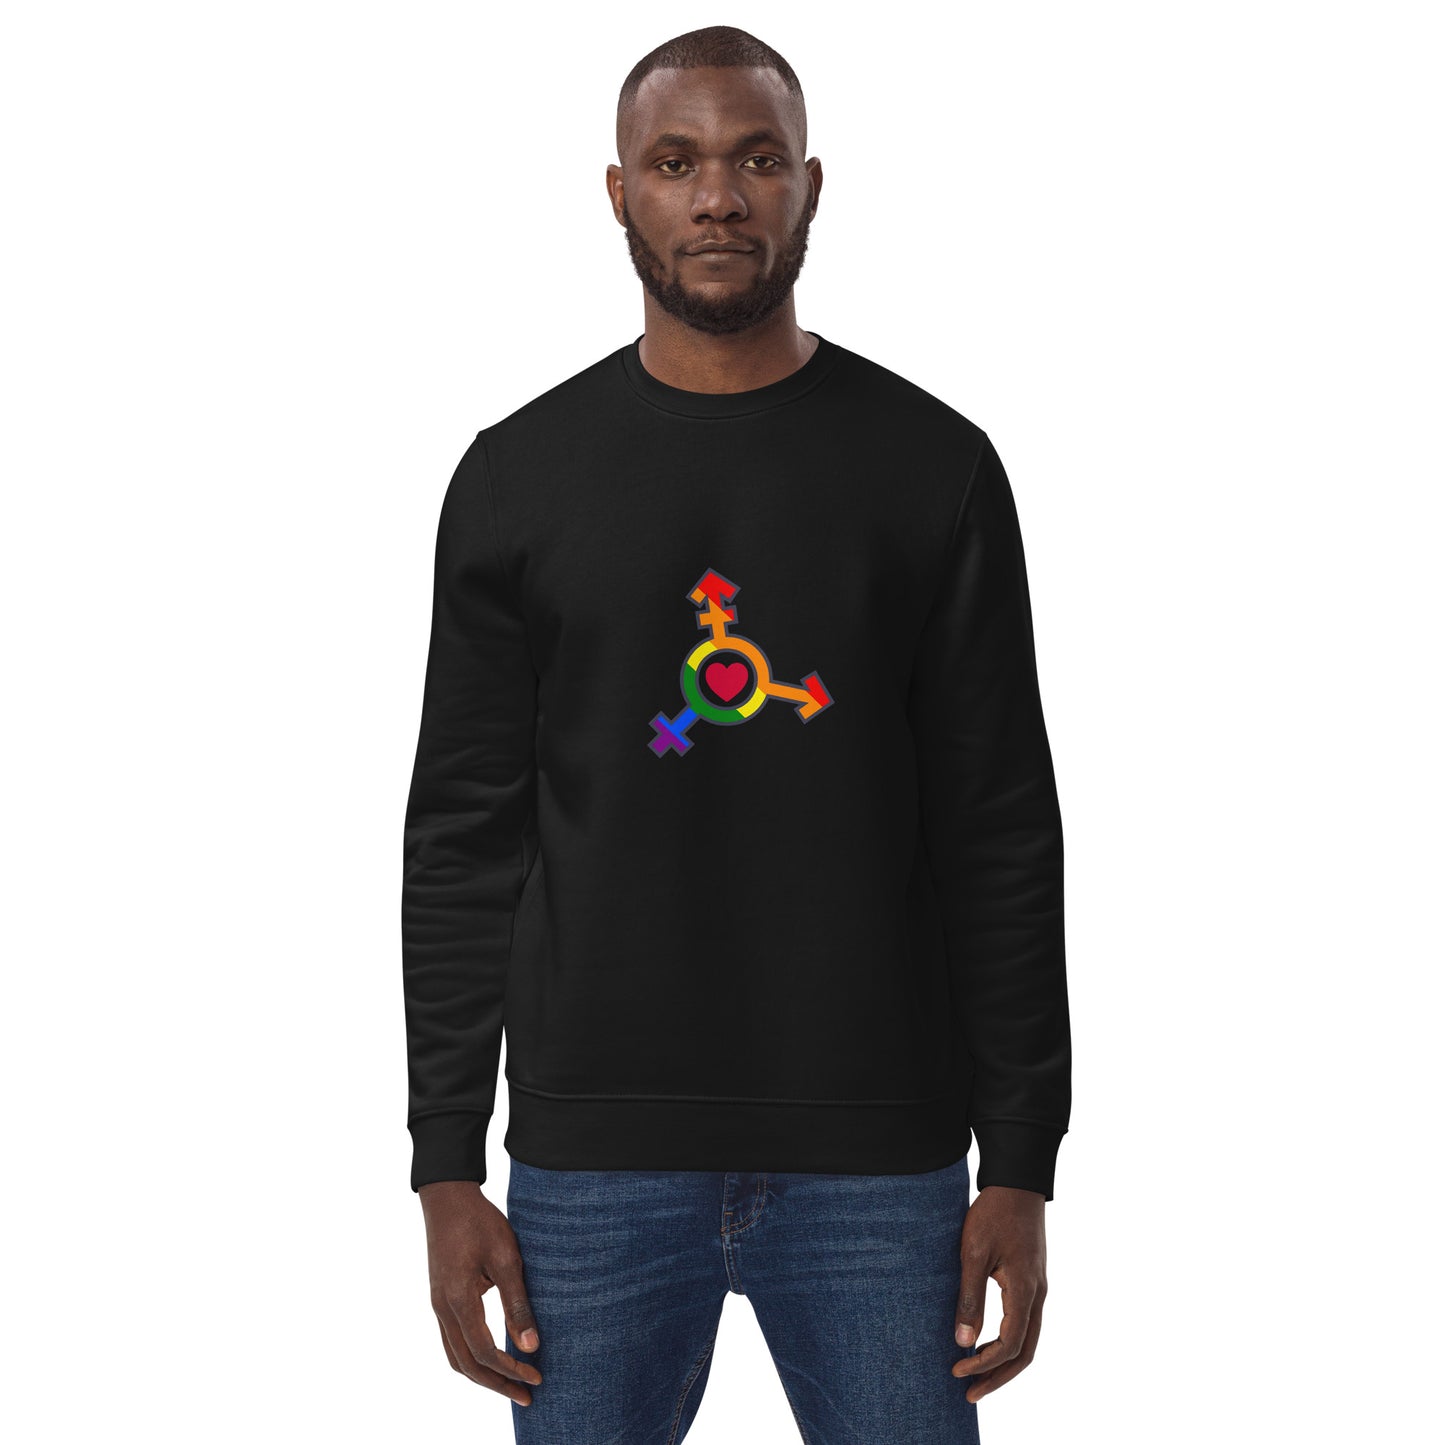 LHBTQI+ eco sweatshirt